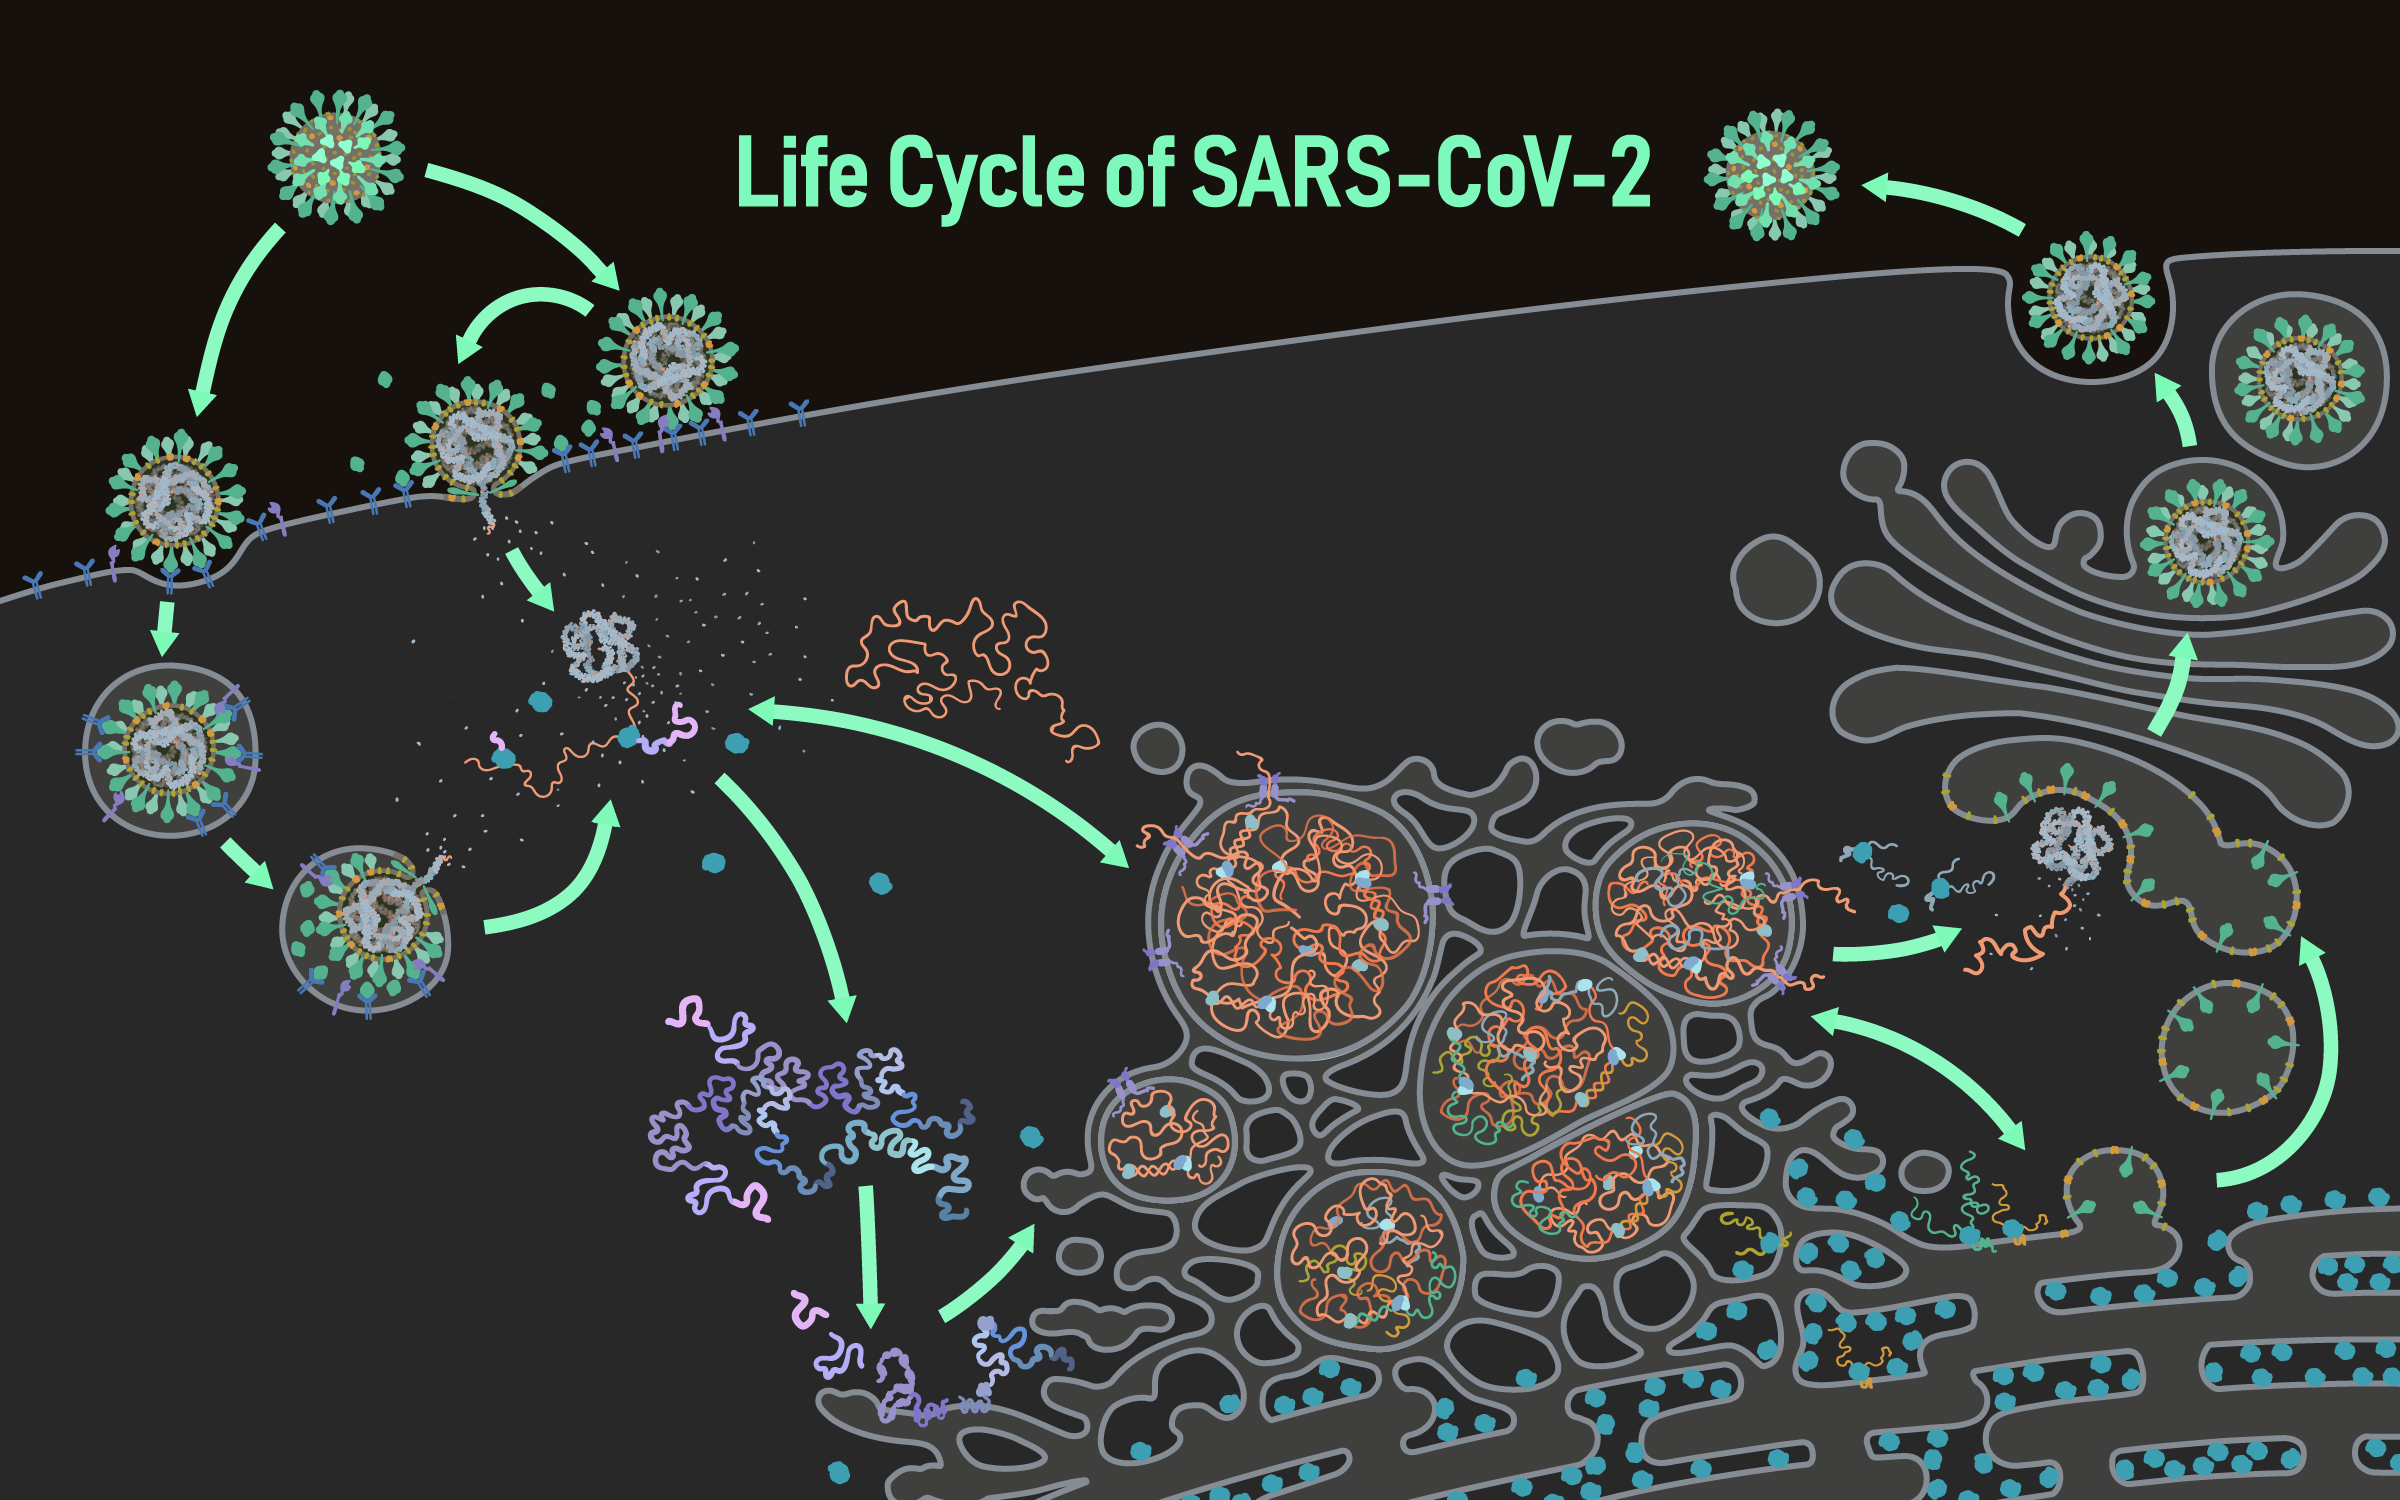 Life cycle of SARS-CoV-2 coronavirus